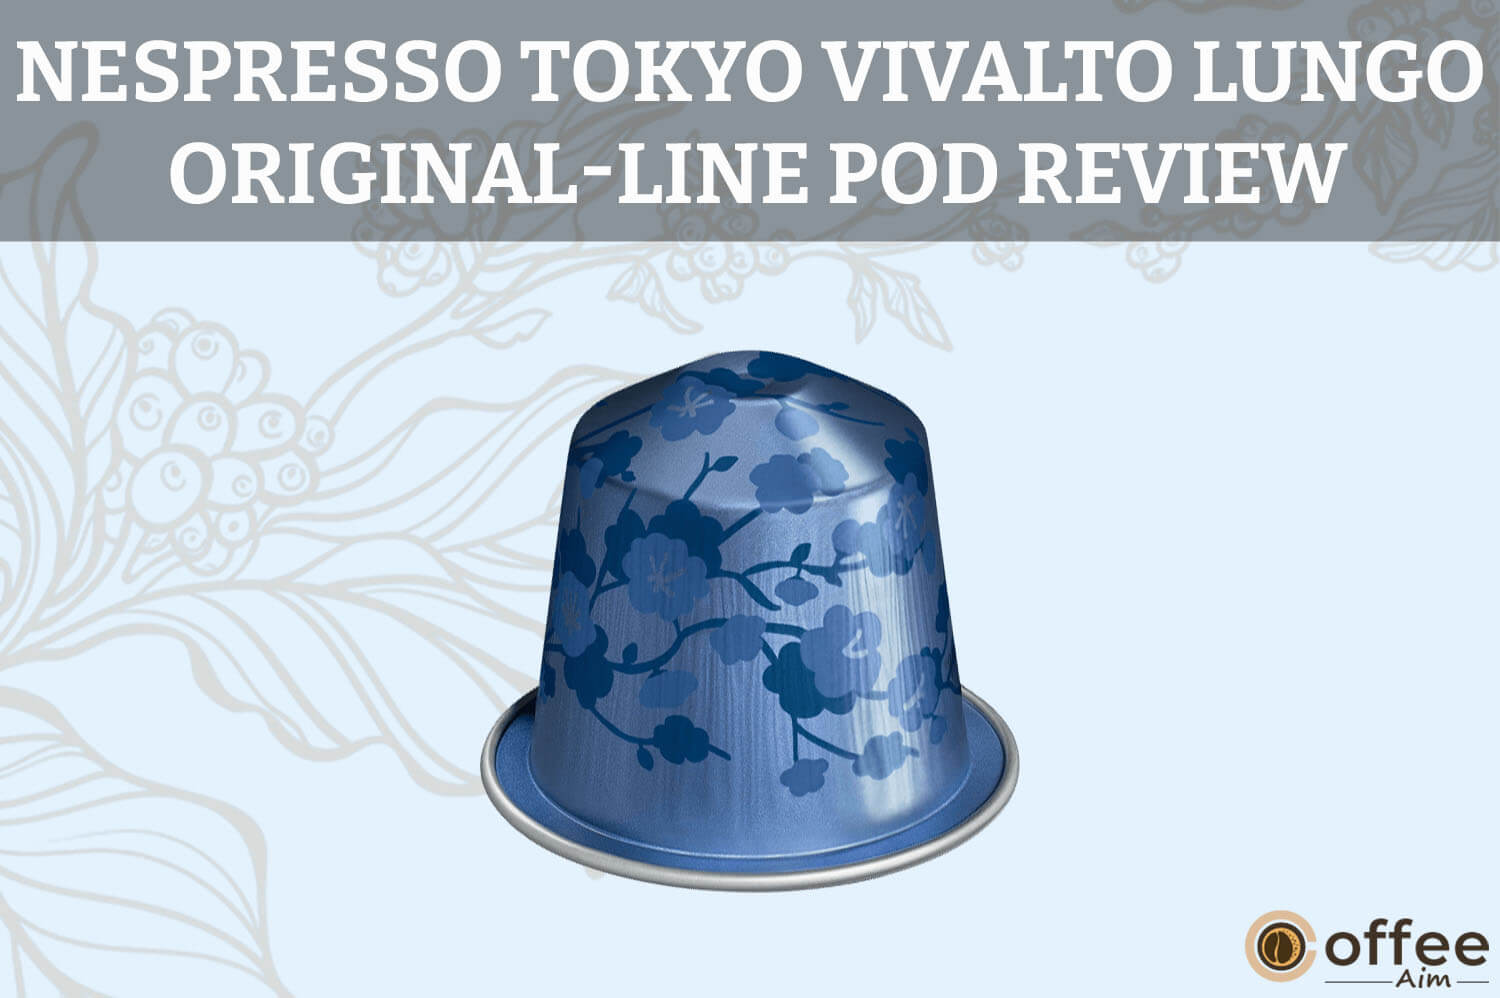 Featured image for the article "Nespresso Tokyo Vivalto Lungo Original-Line Pod Review"